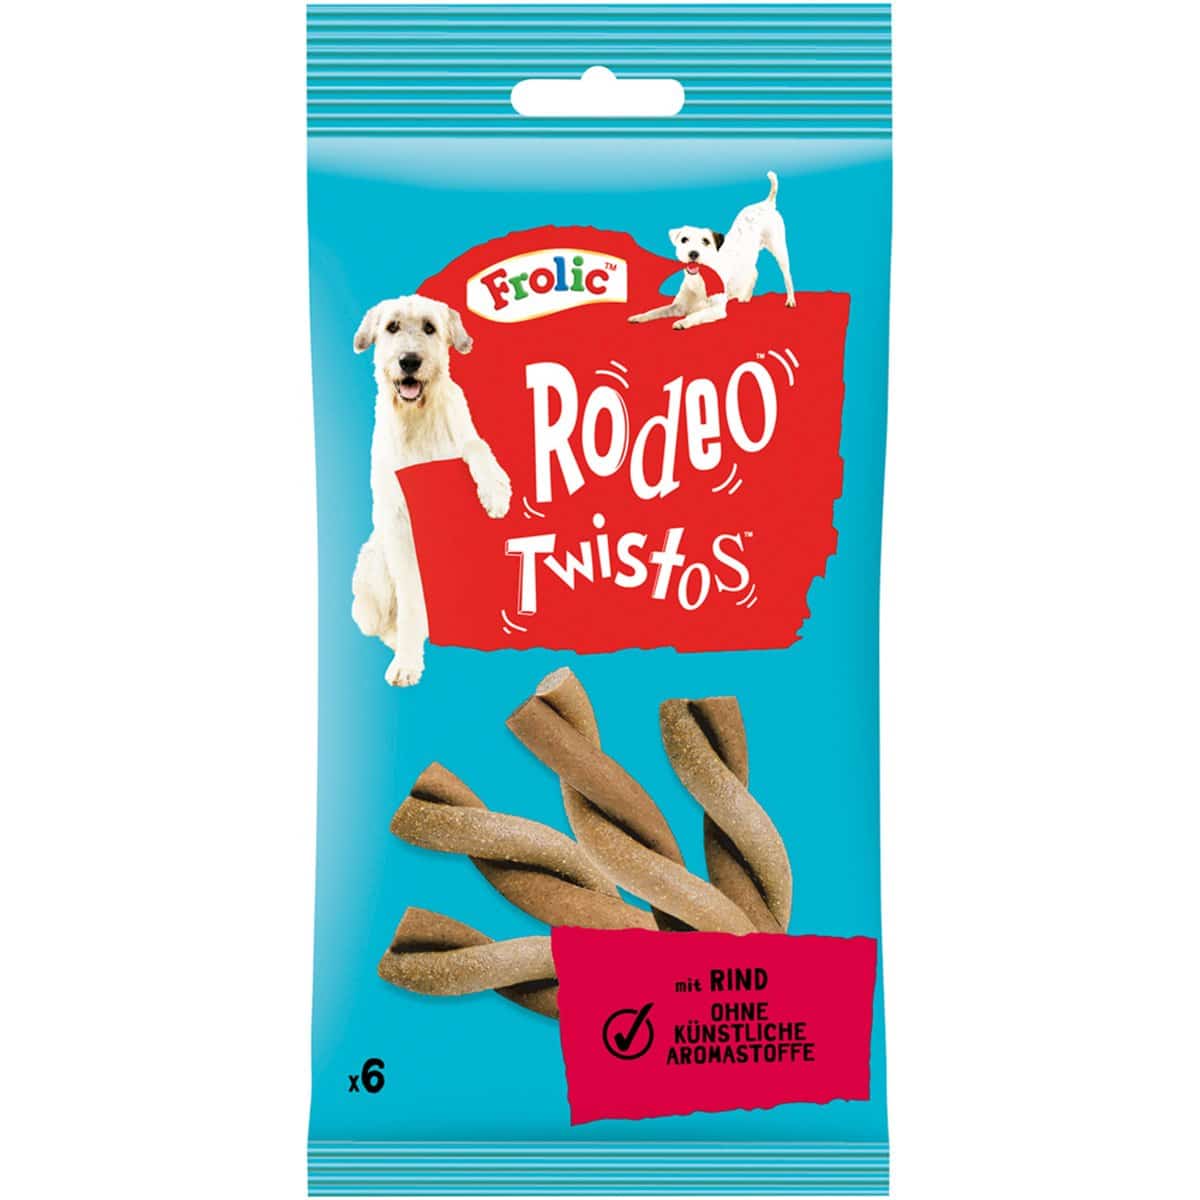 Frolic Hundesnack Rodeo Twistos Rind 6 Sticks (105g)